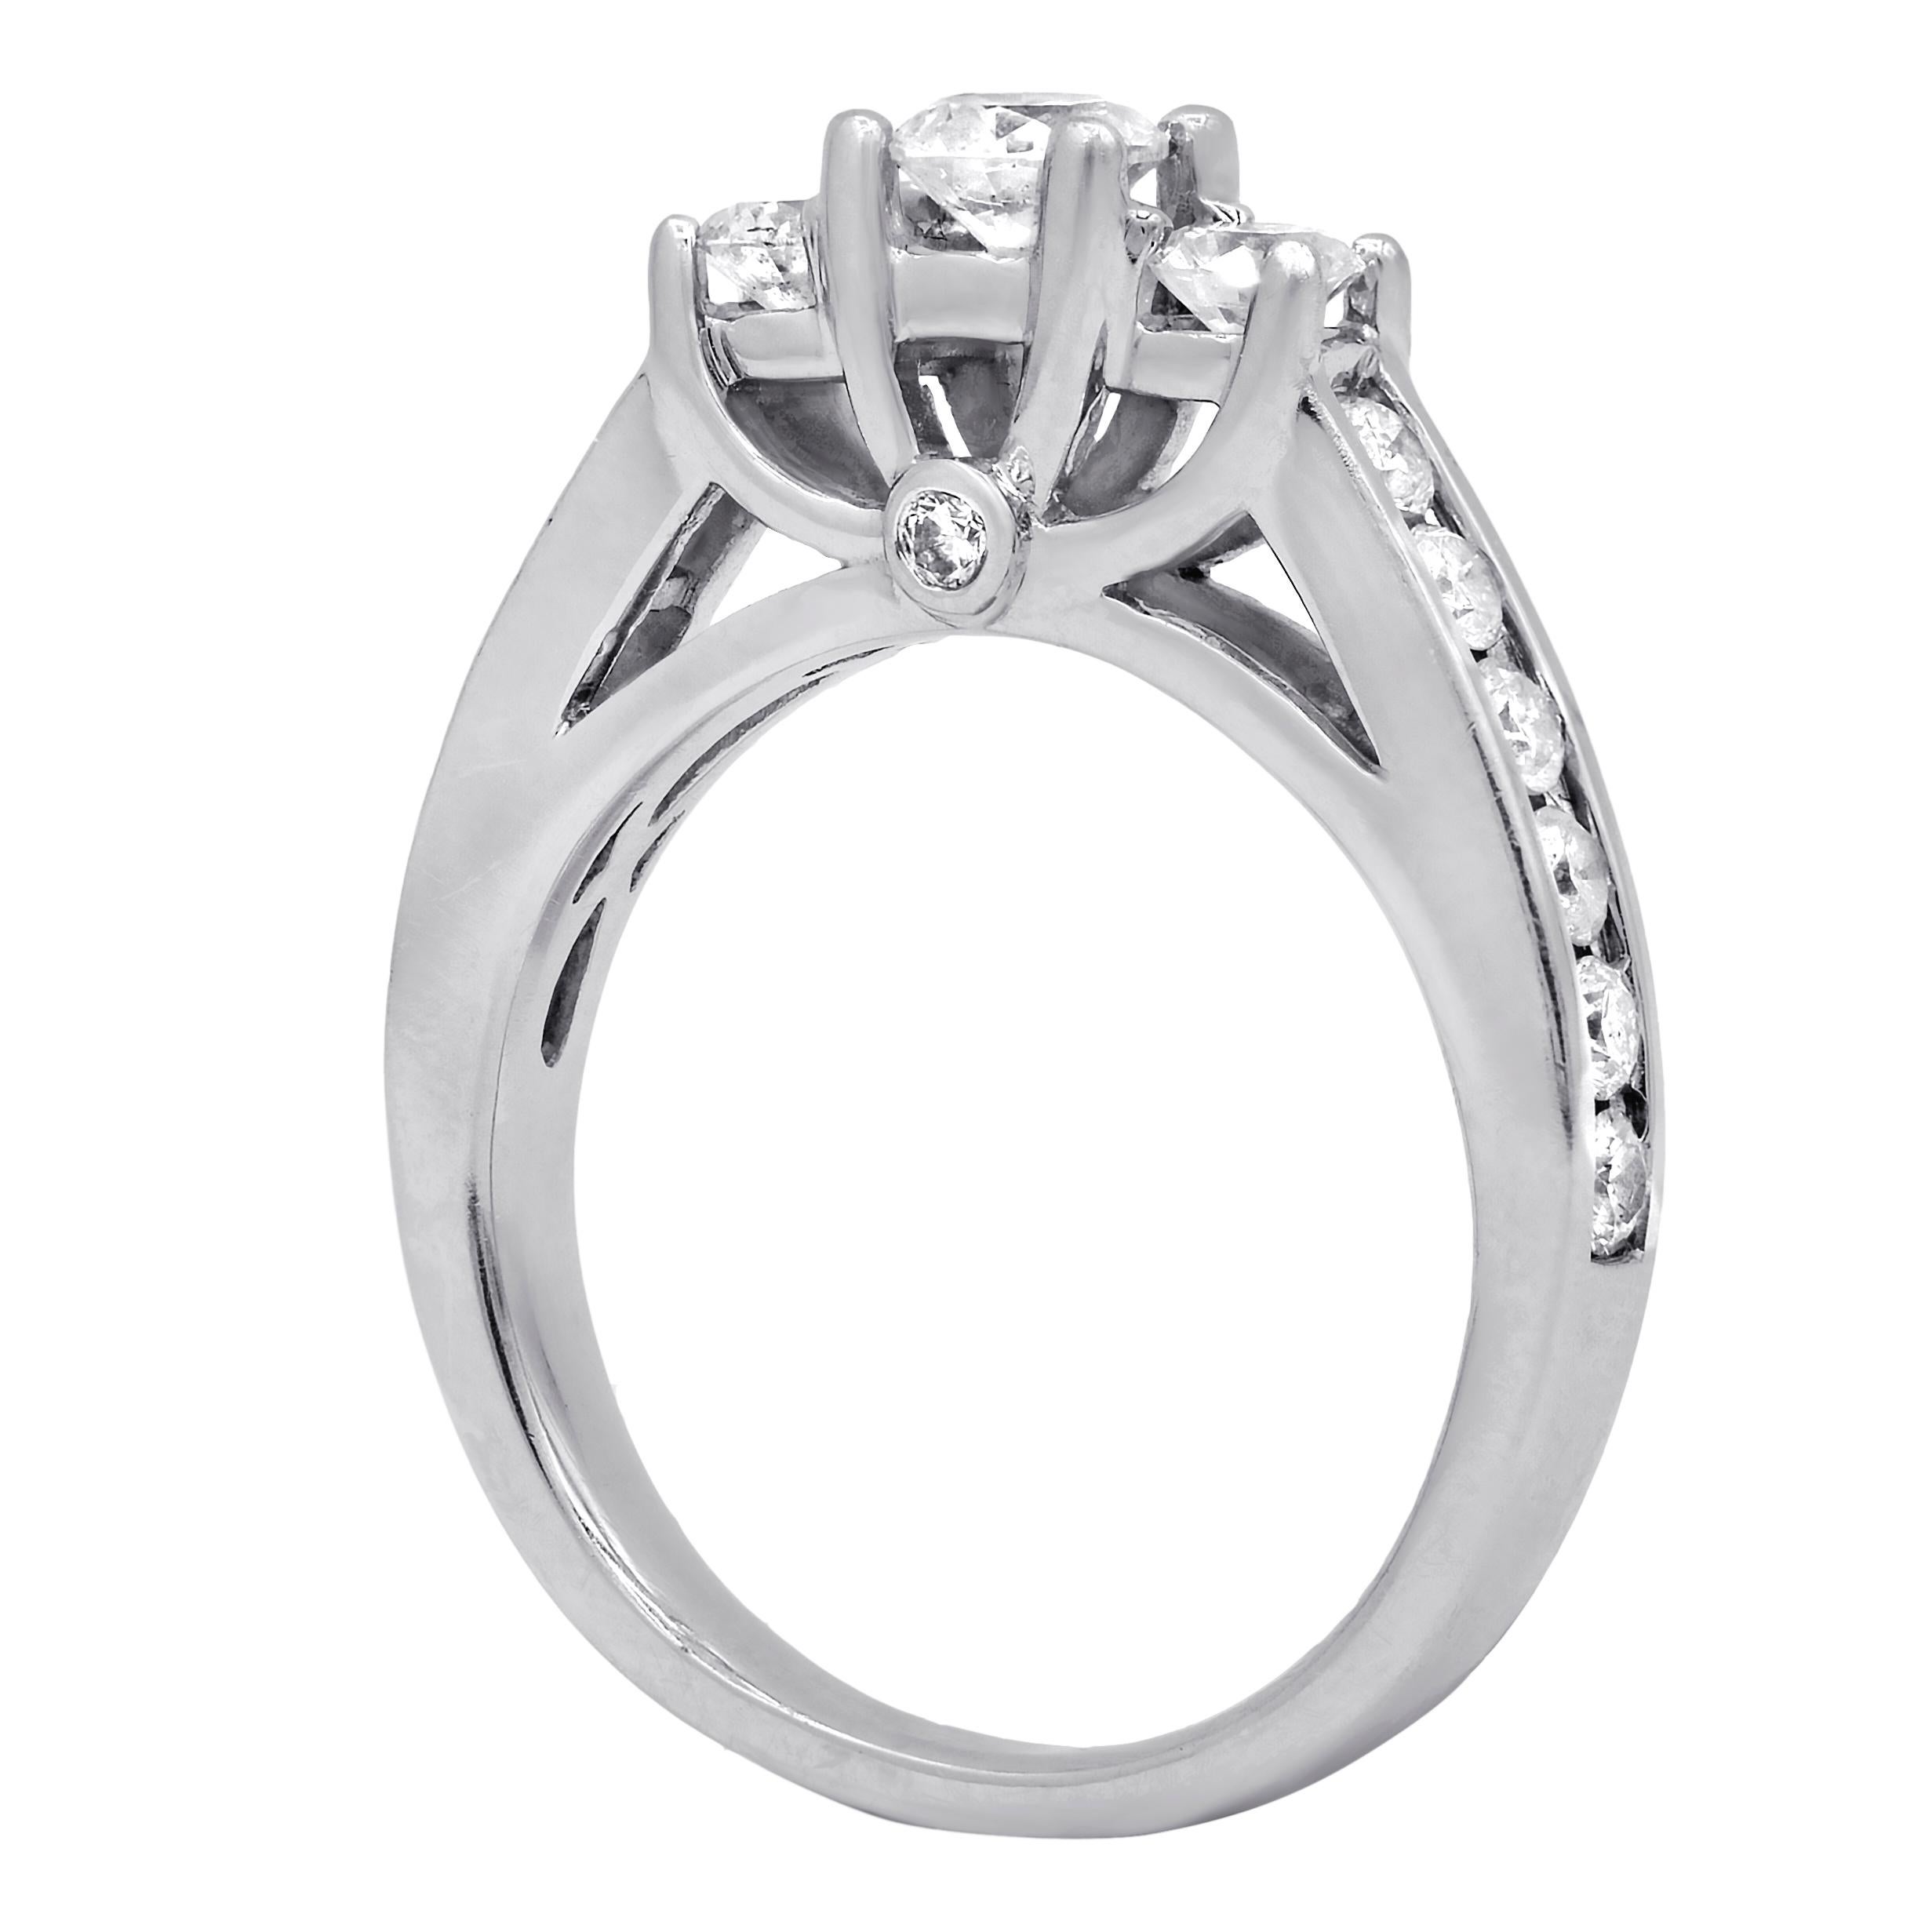 14kt white gold three diamonds engagement ring, center .45 ct round diamond set with 1.25ct of side diamonds
